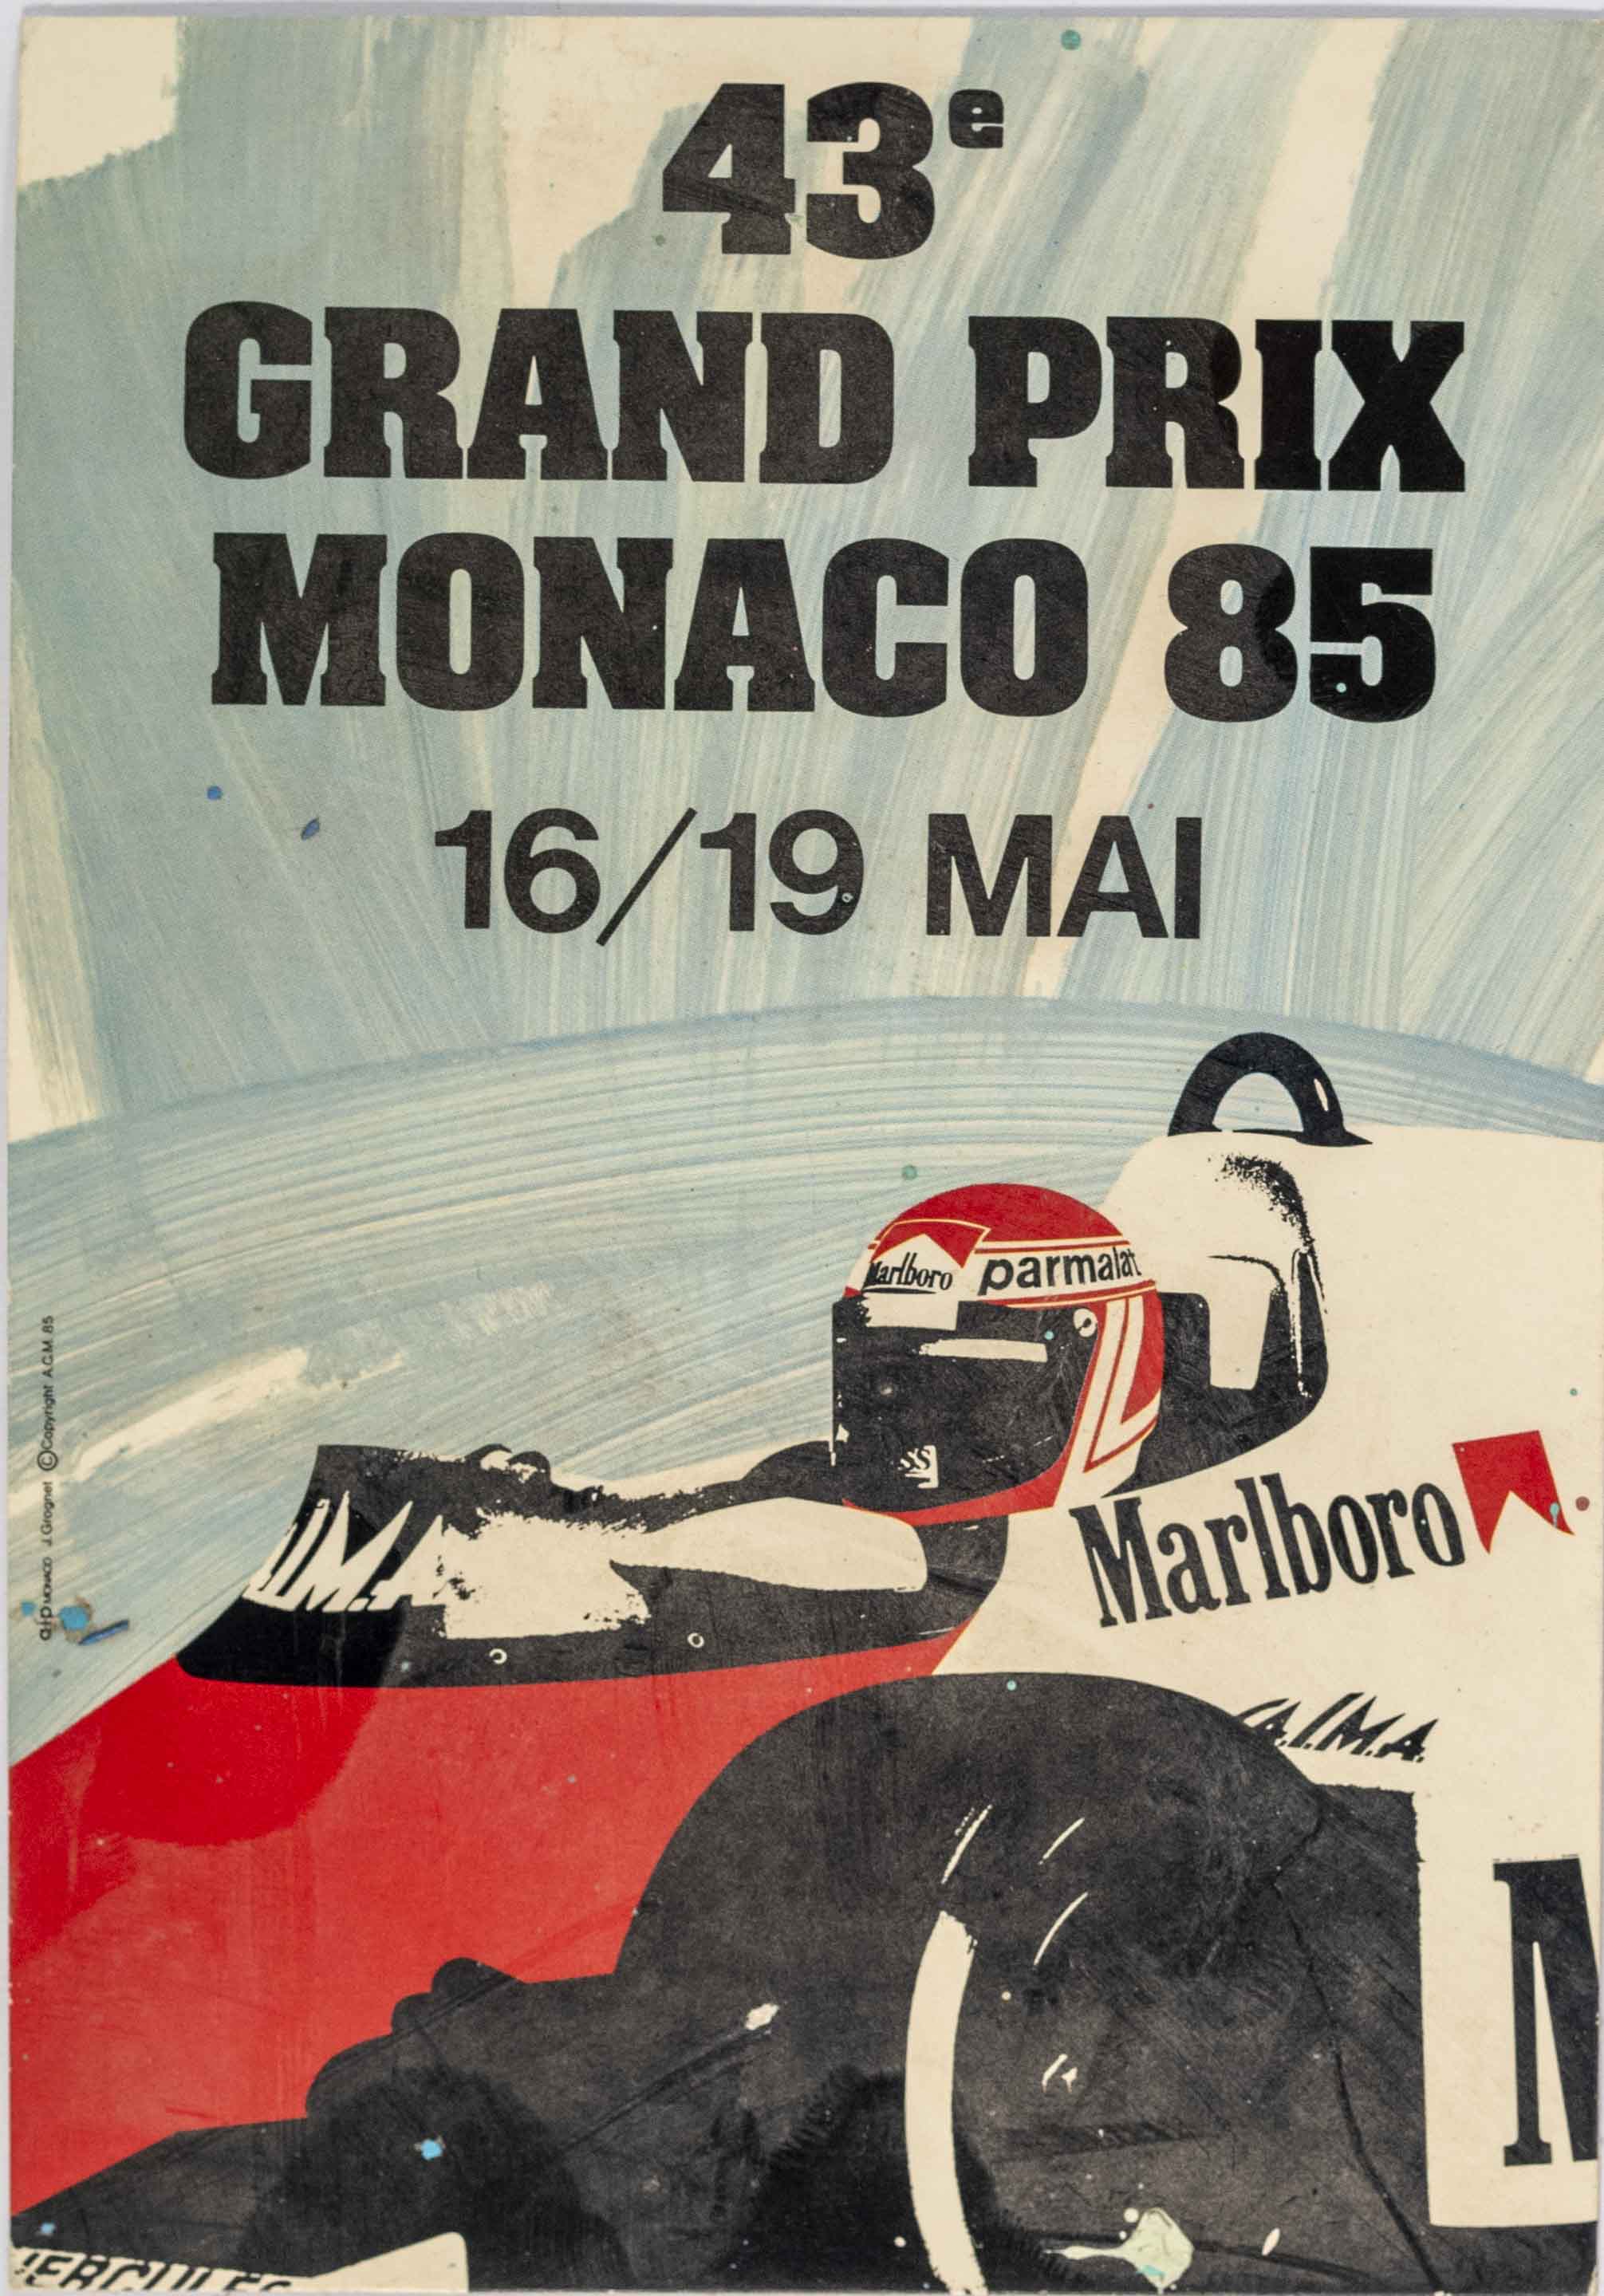 Pohlednice, 37 Grand prix Monaco, 1985